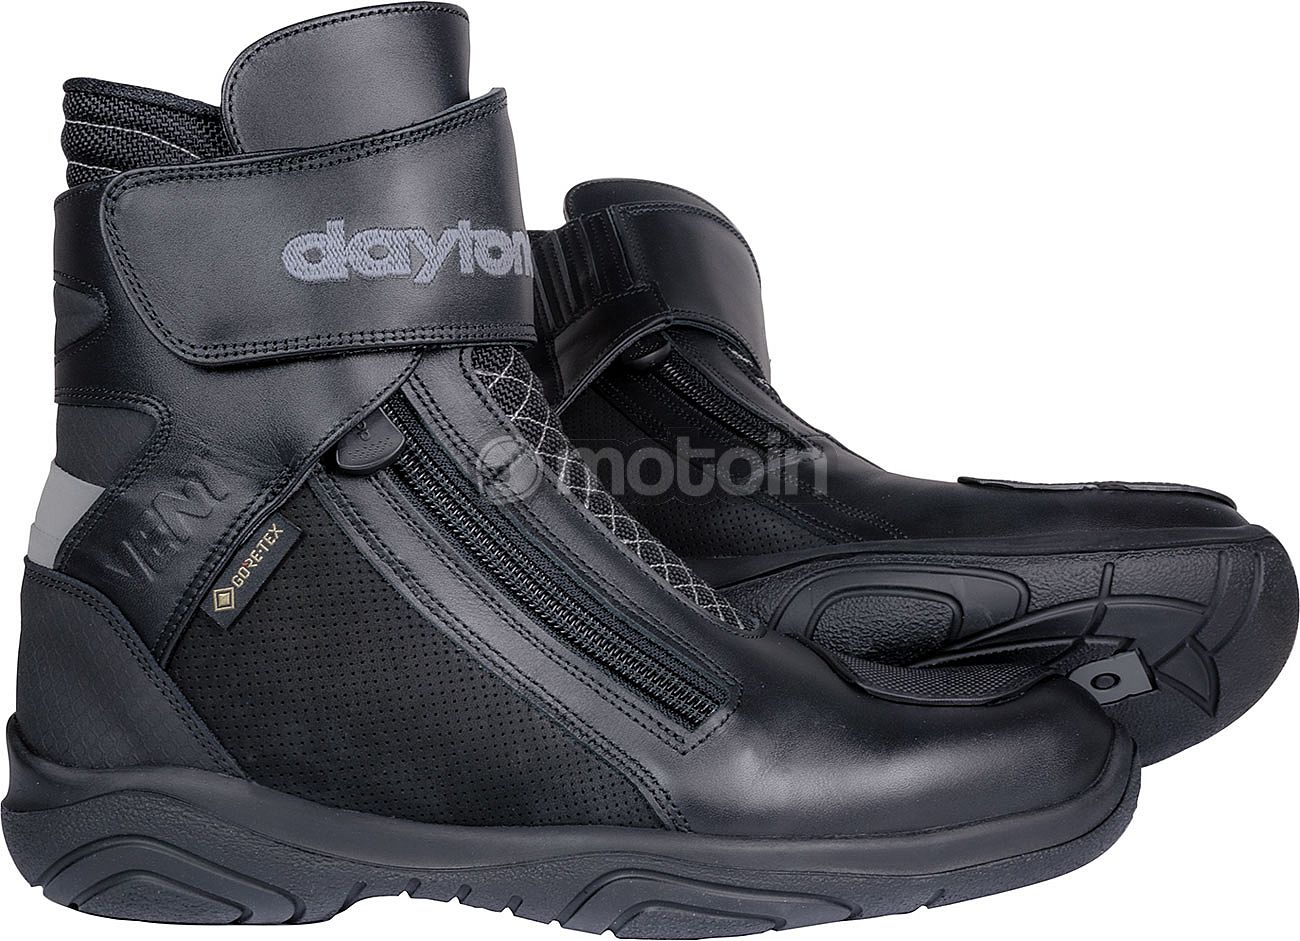 Daytona Arrow Vent GTX, calzado Gore-Tex